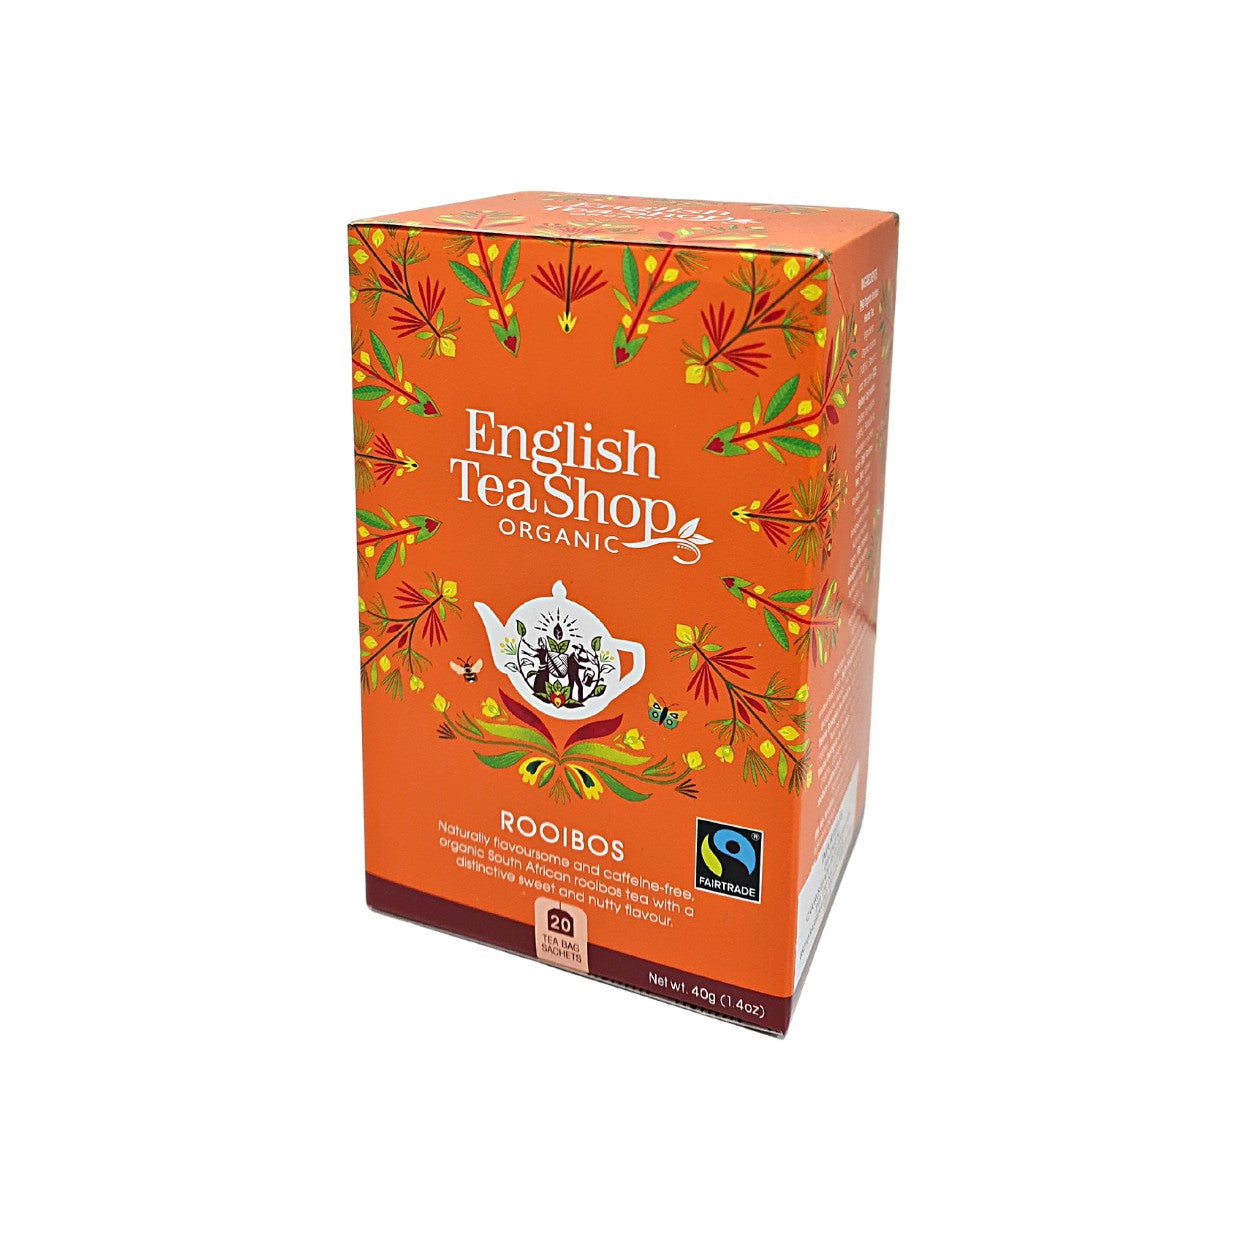 Té ETS Rooibos Orgánico 20 bolsitas. Sri Lanka. The English Tea Shop